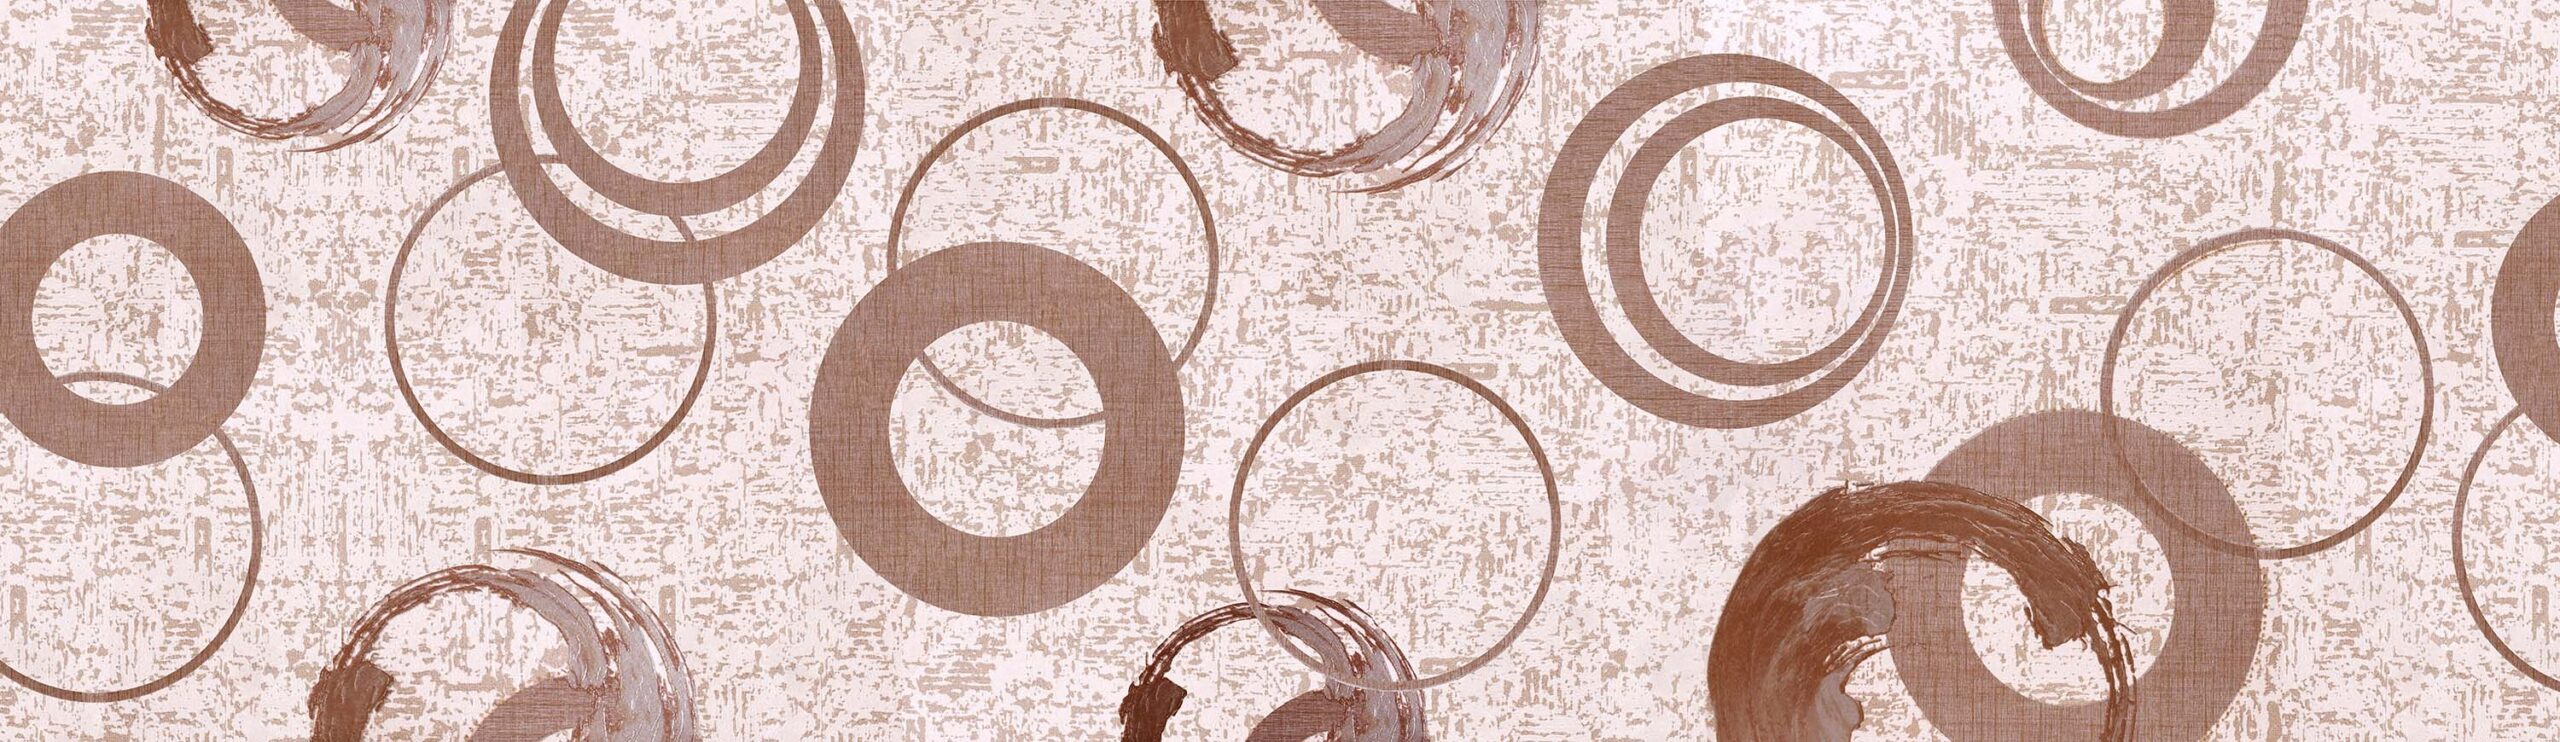 Circles Decorative Texture Brown Wall Border Sticker